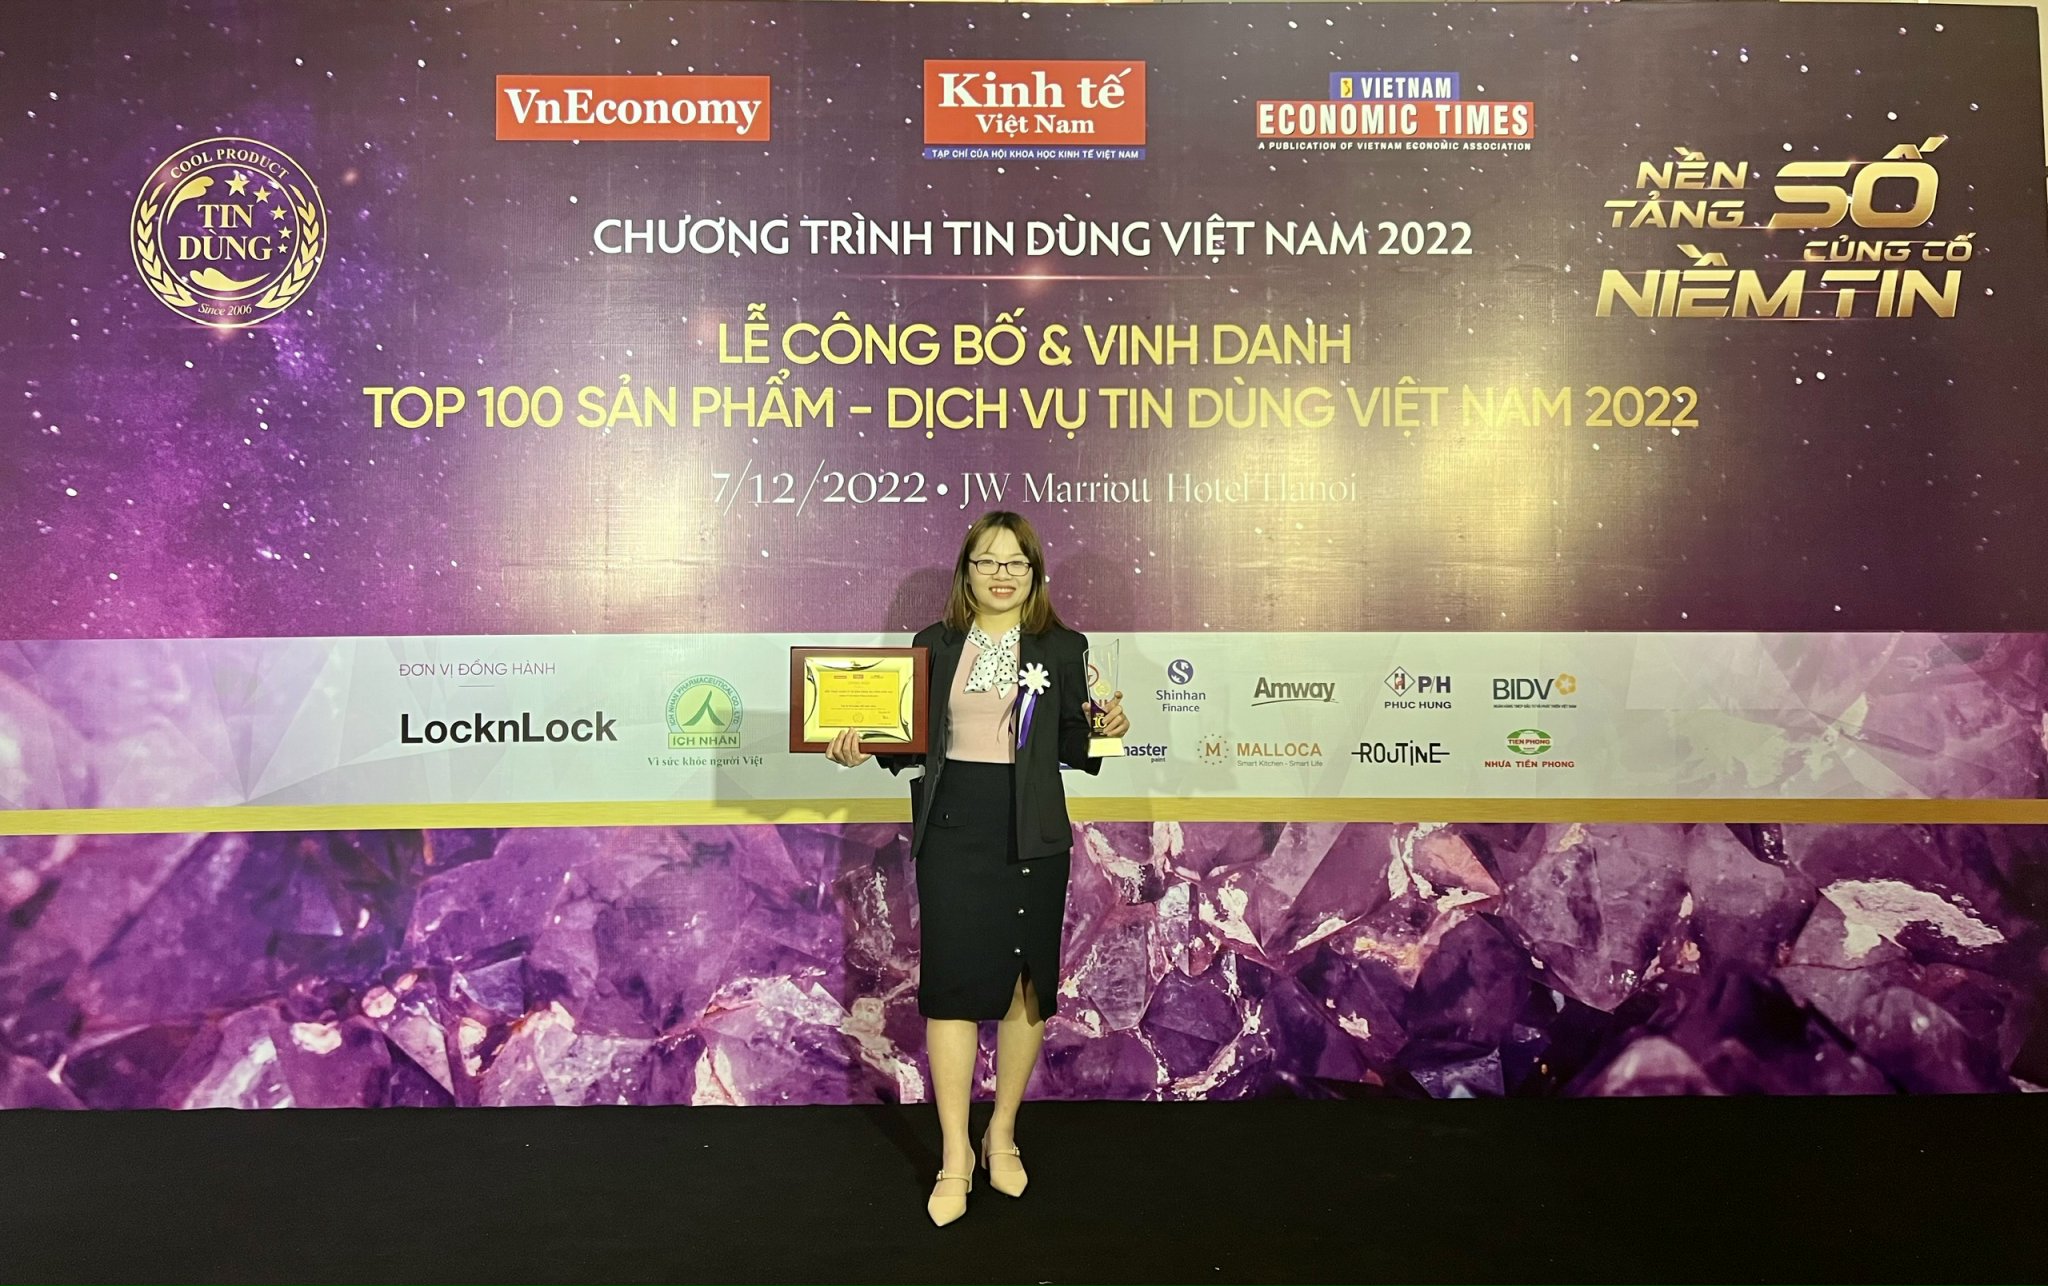 Top 10 san pham - dich vu Cong nghe so duoc tin dung Viet Nam 2022